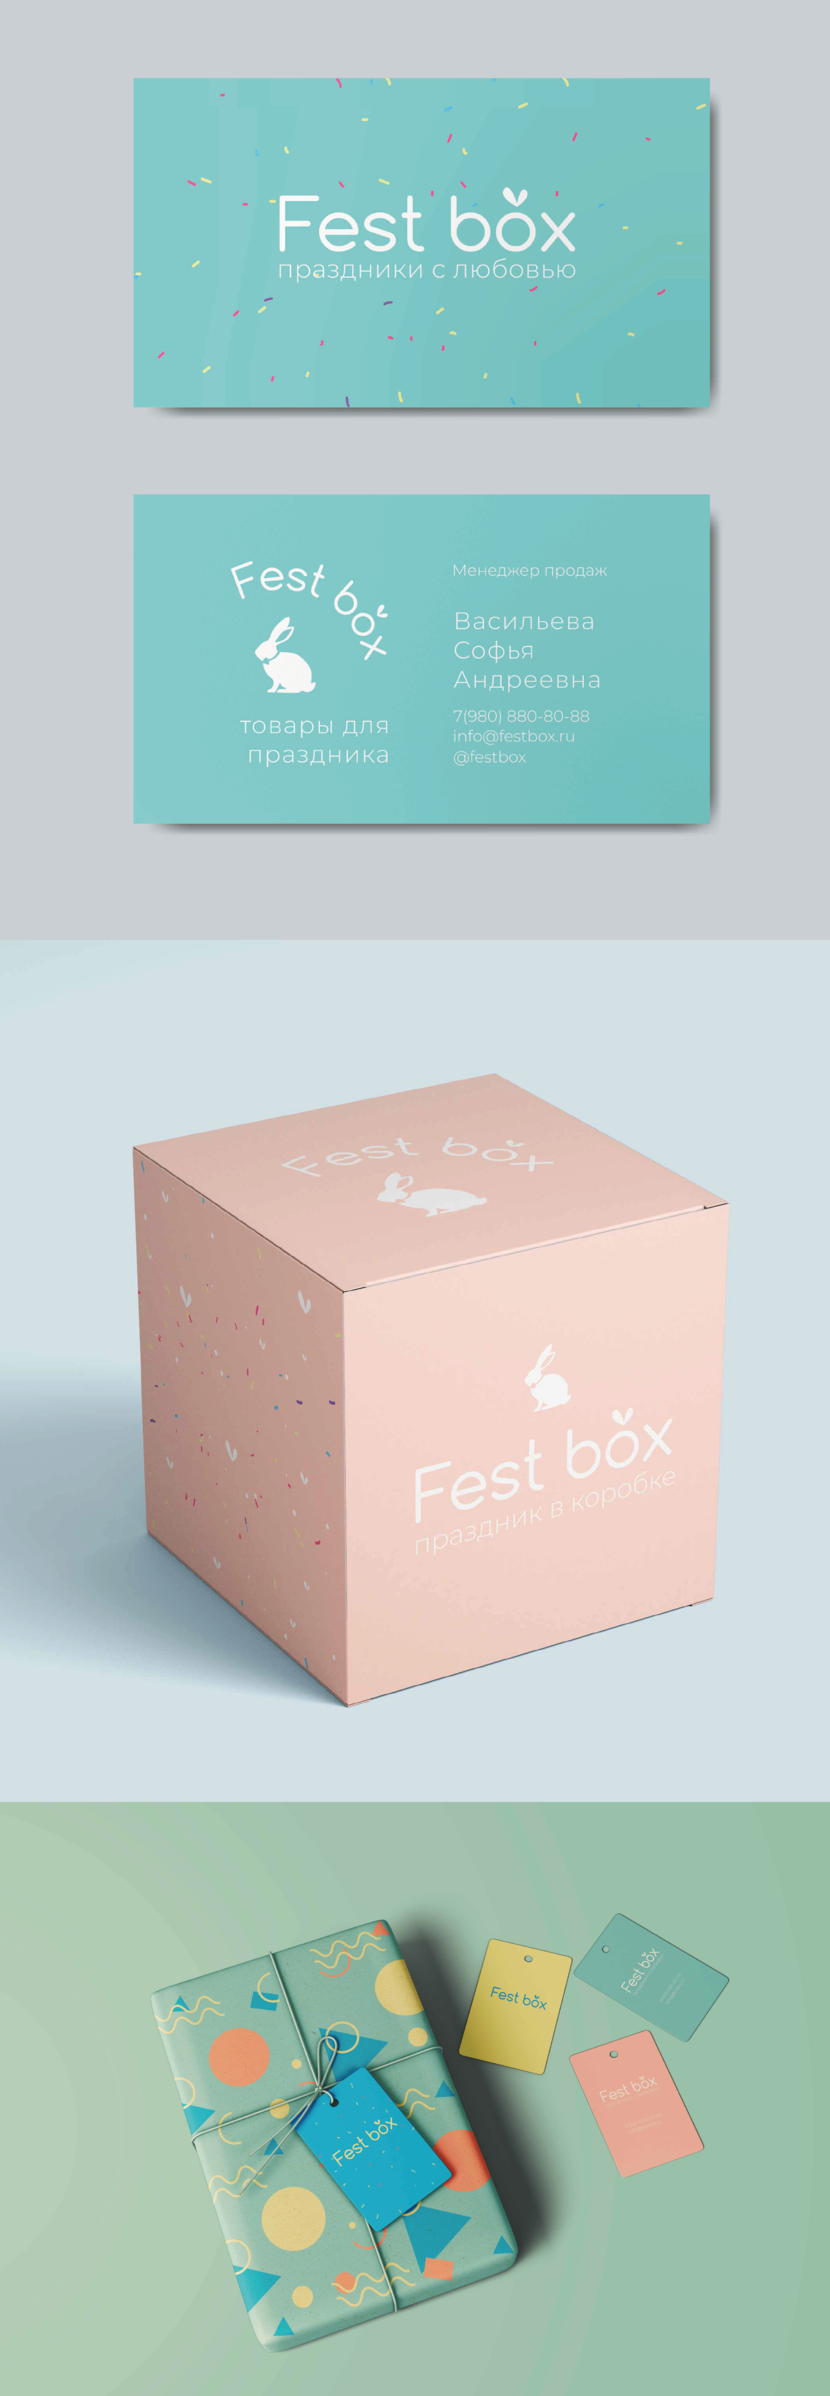 Визуализация на носителях. - Логотип и фирменный знак компании FestBox